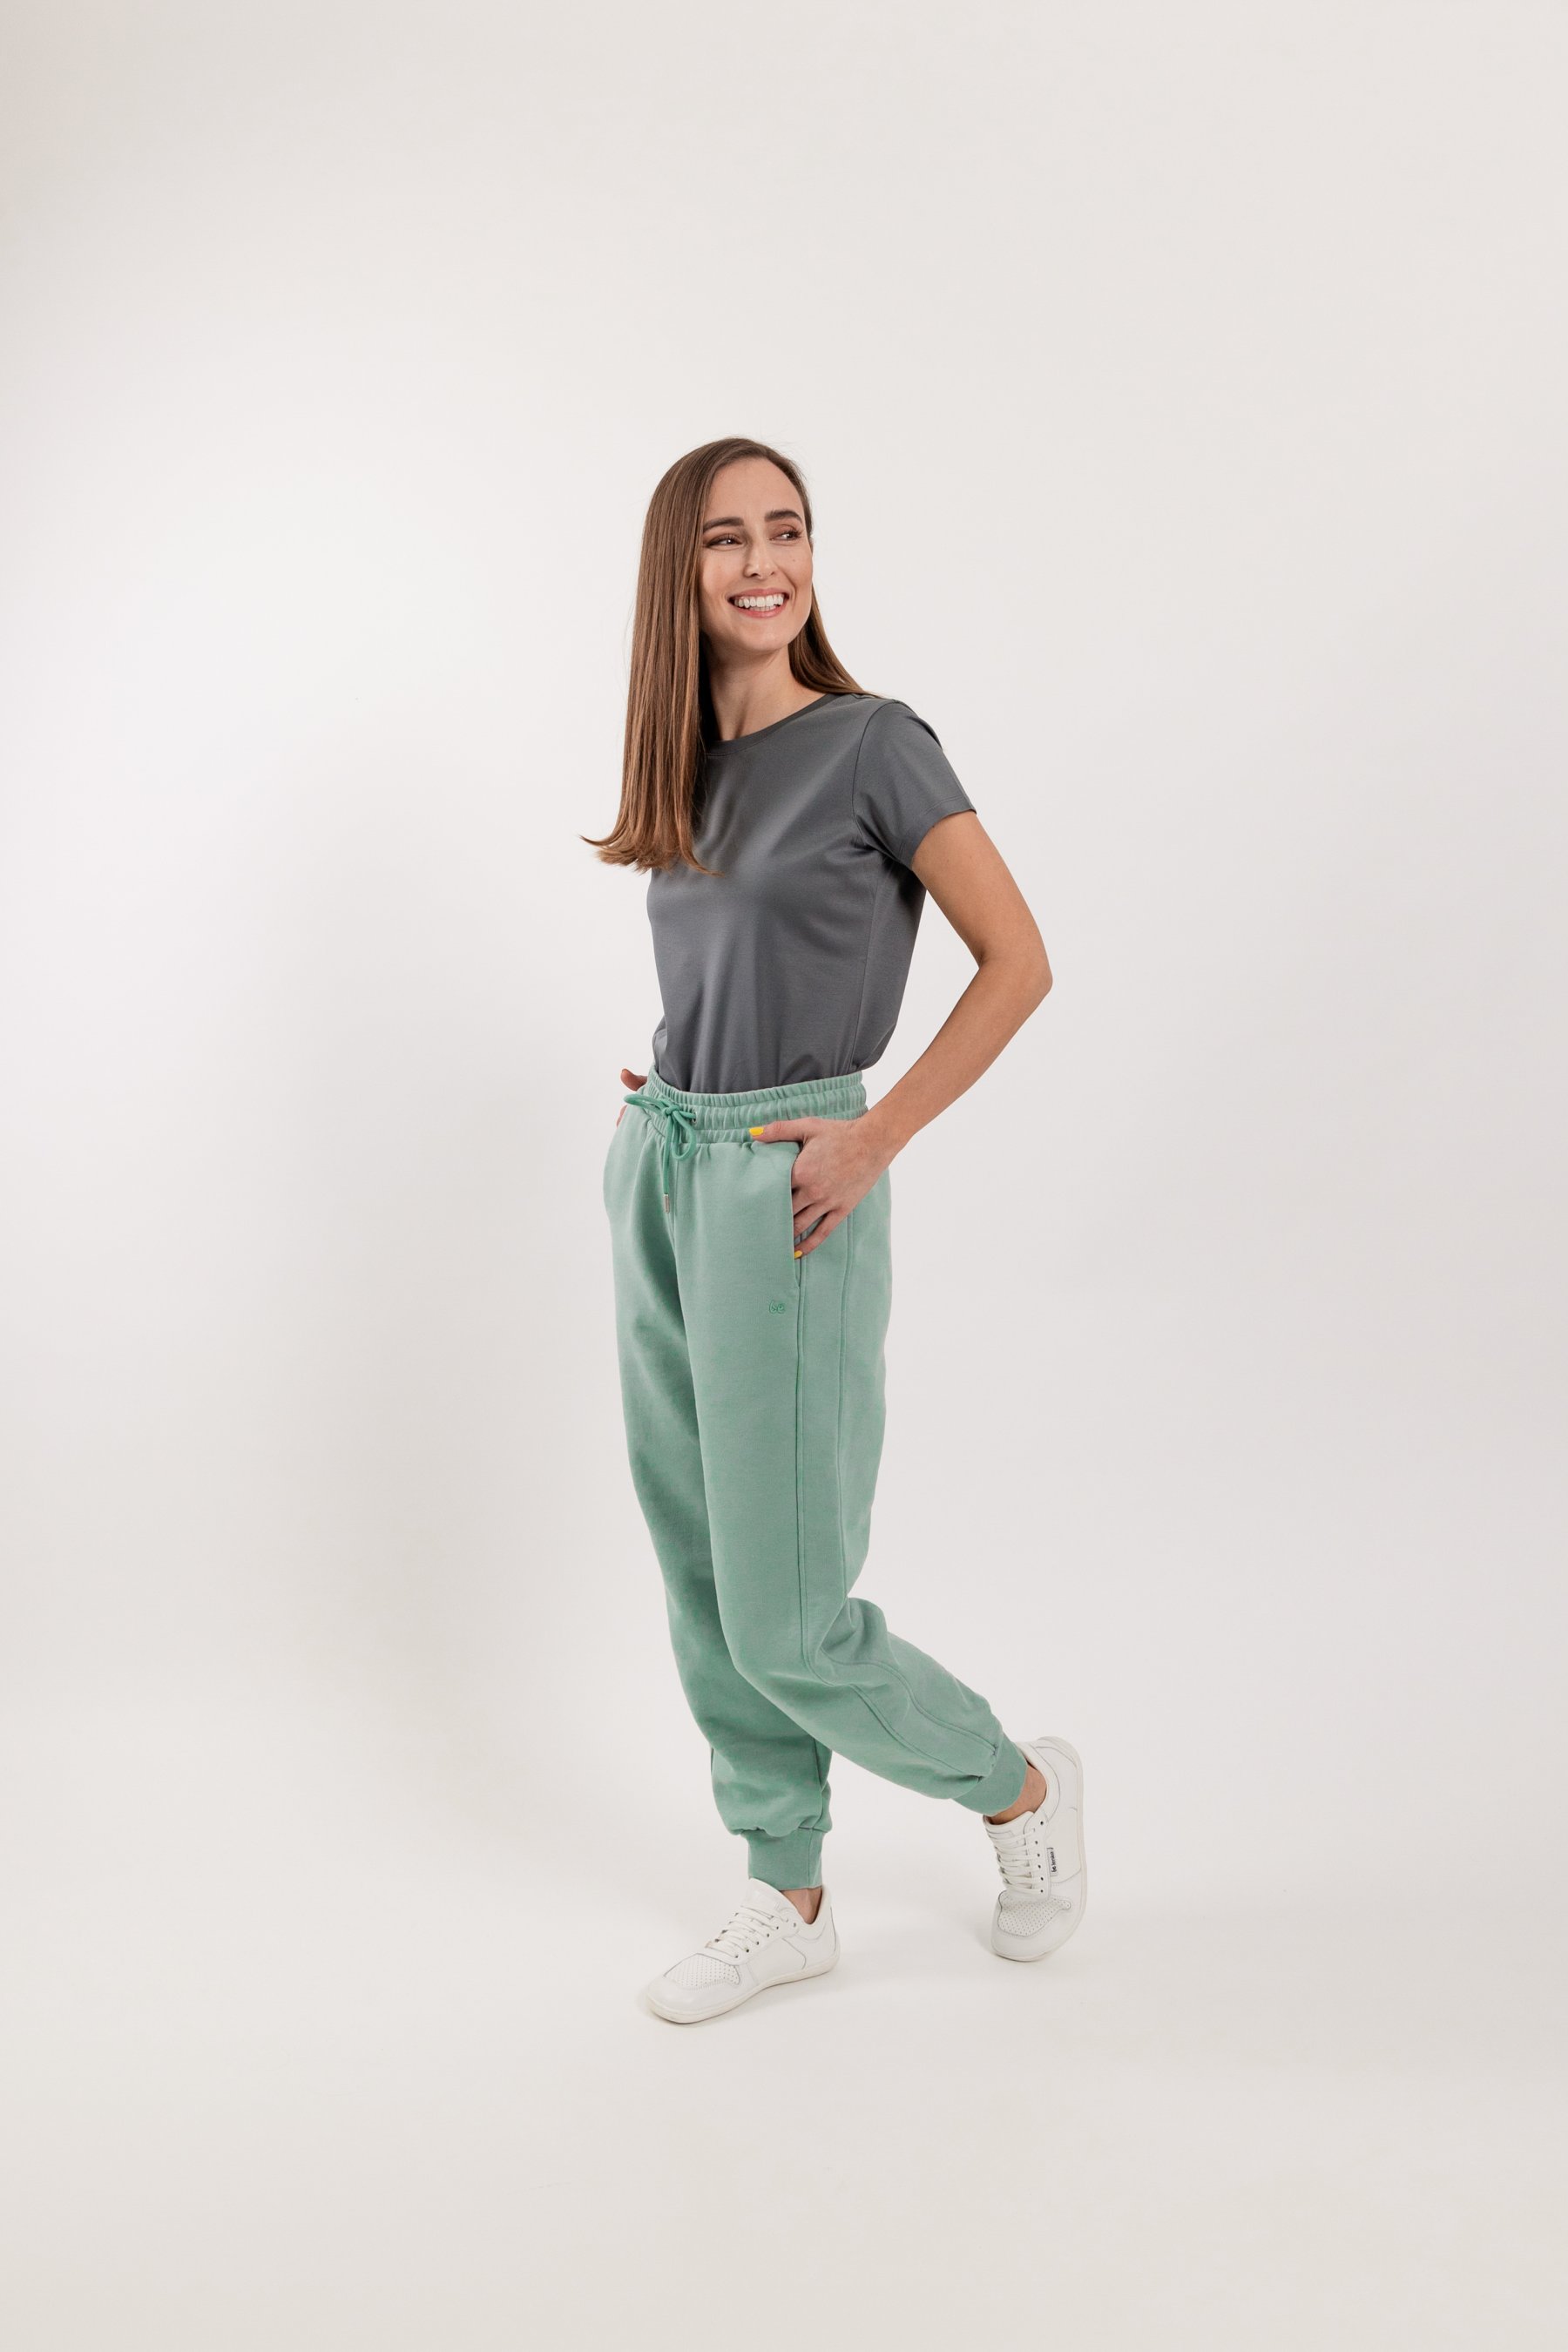 Brilliant Basics Women's Track Pants - Green - Size Small